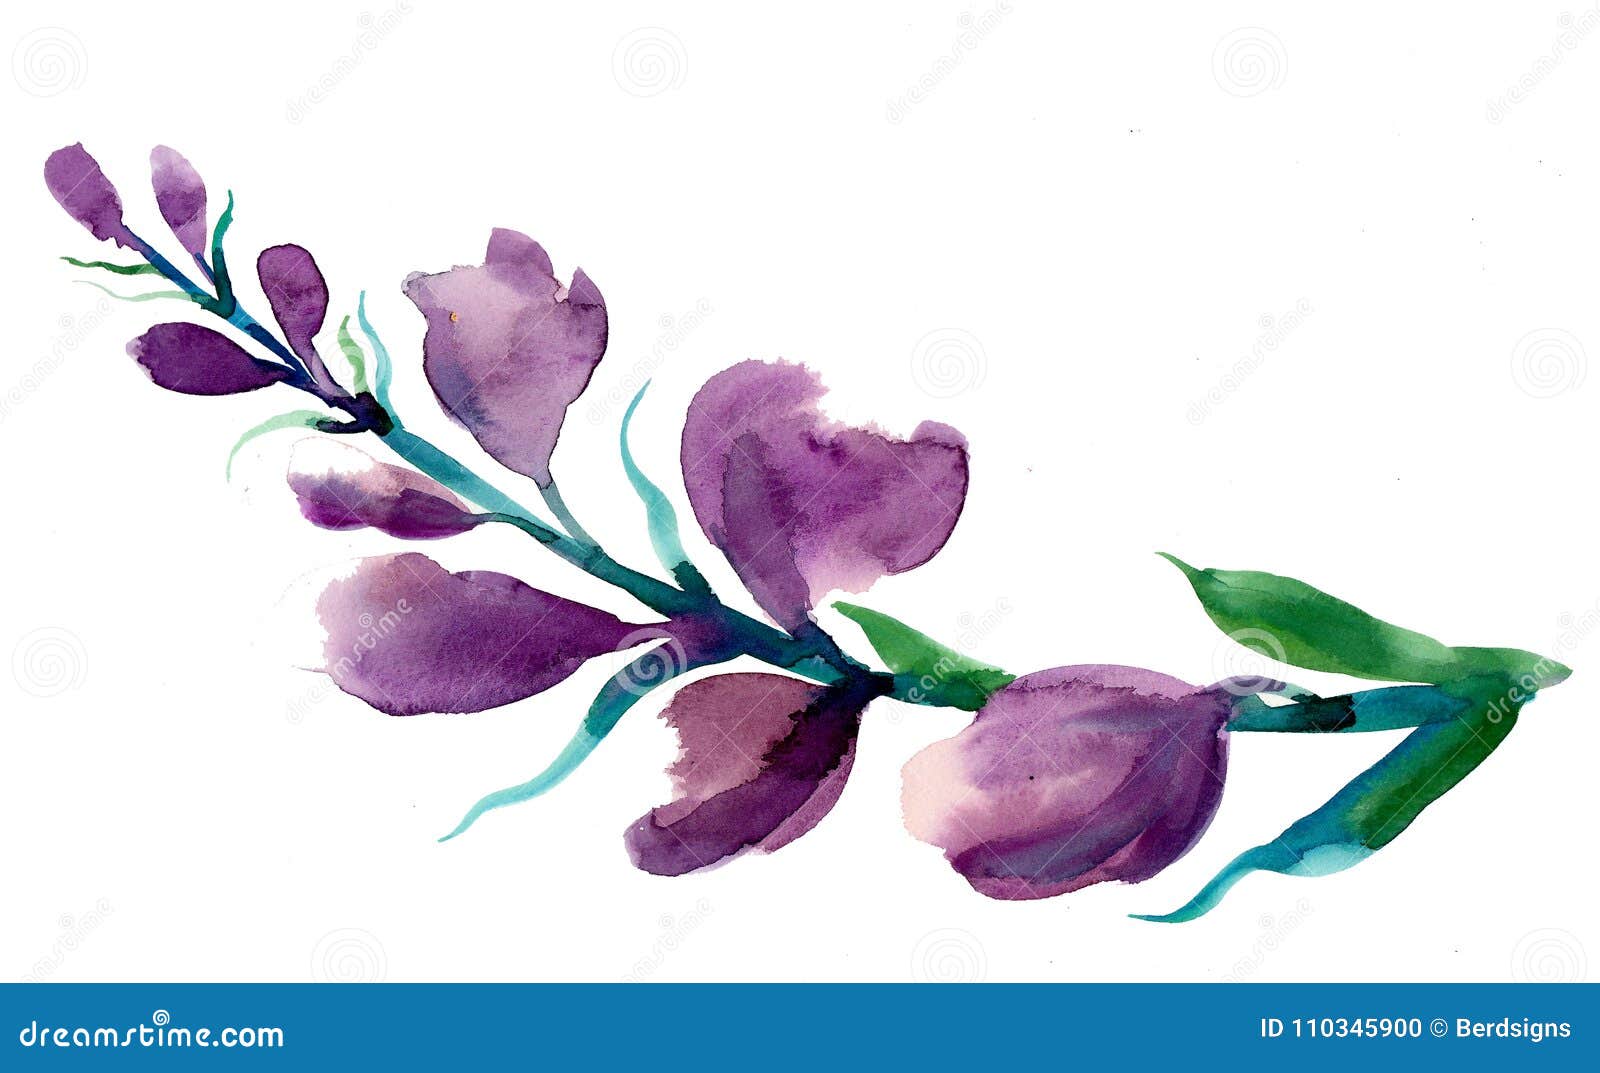 Purple Flowers On Branch Stock Illustration. Illustration Of Sketch - 110345900